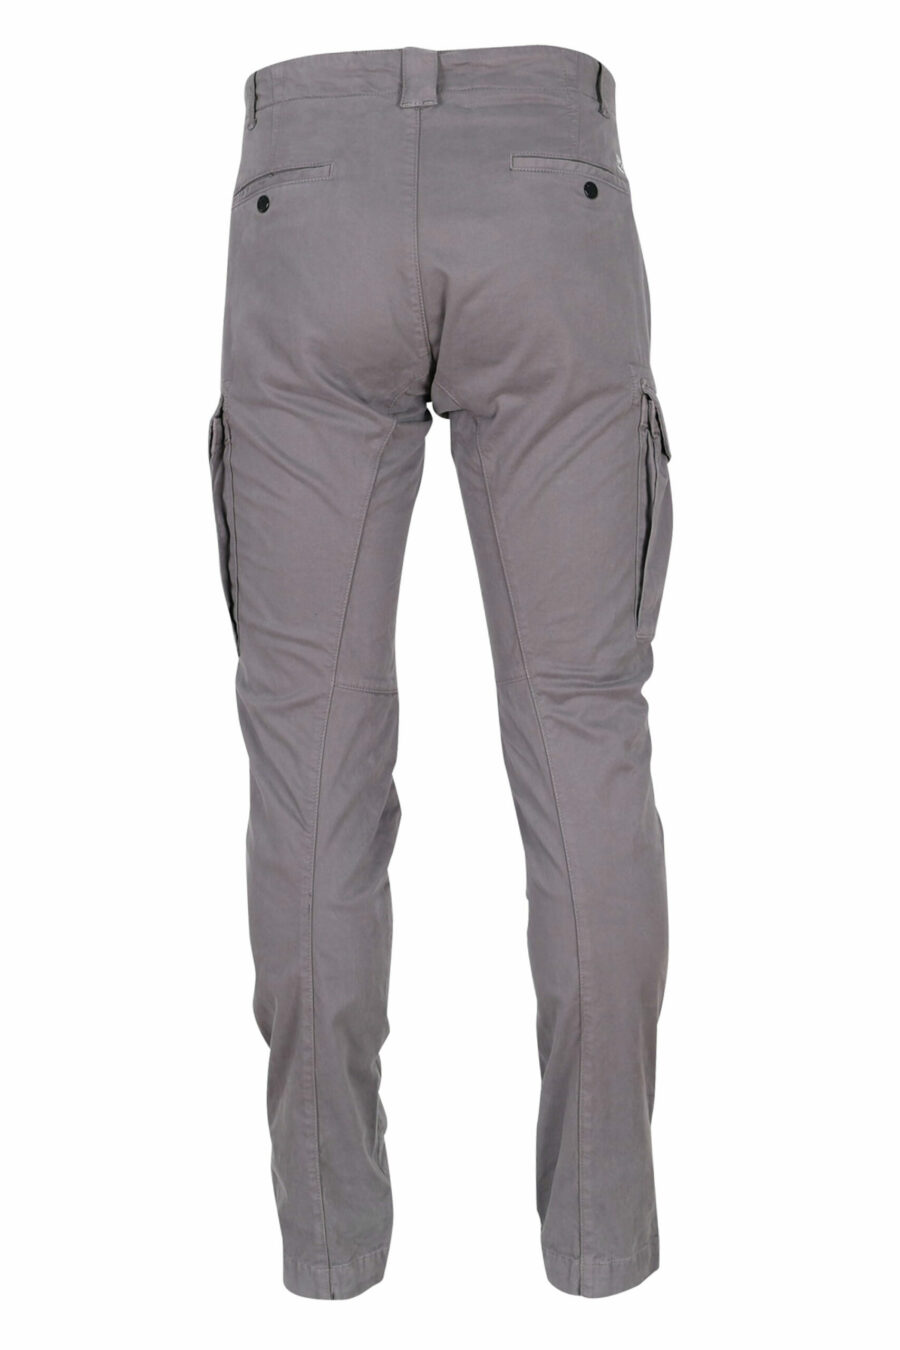 Pantalón gris marengo estilo cargo de satén elástico y logo lente - 7620943597400 2 scaled